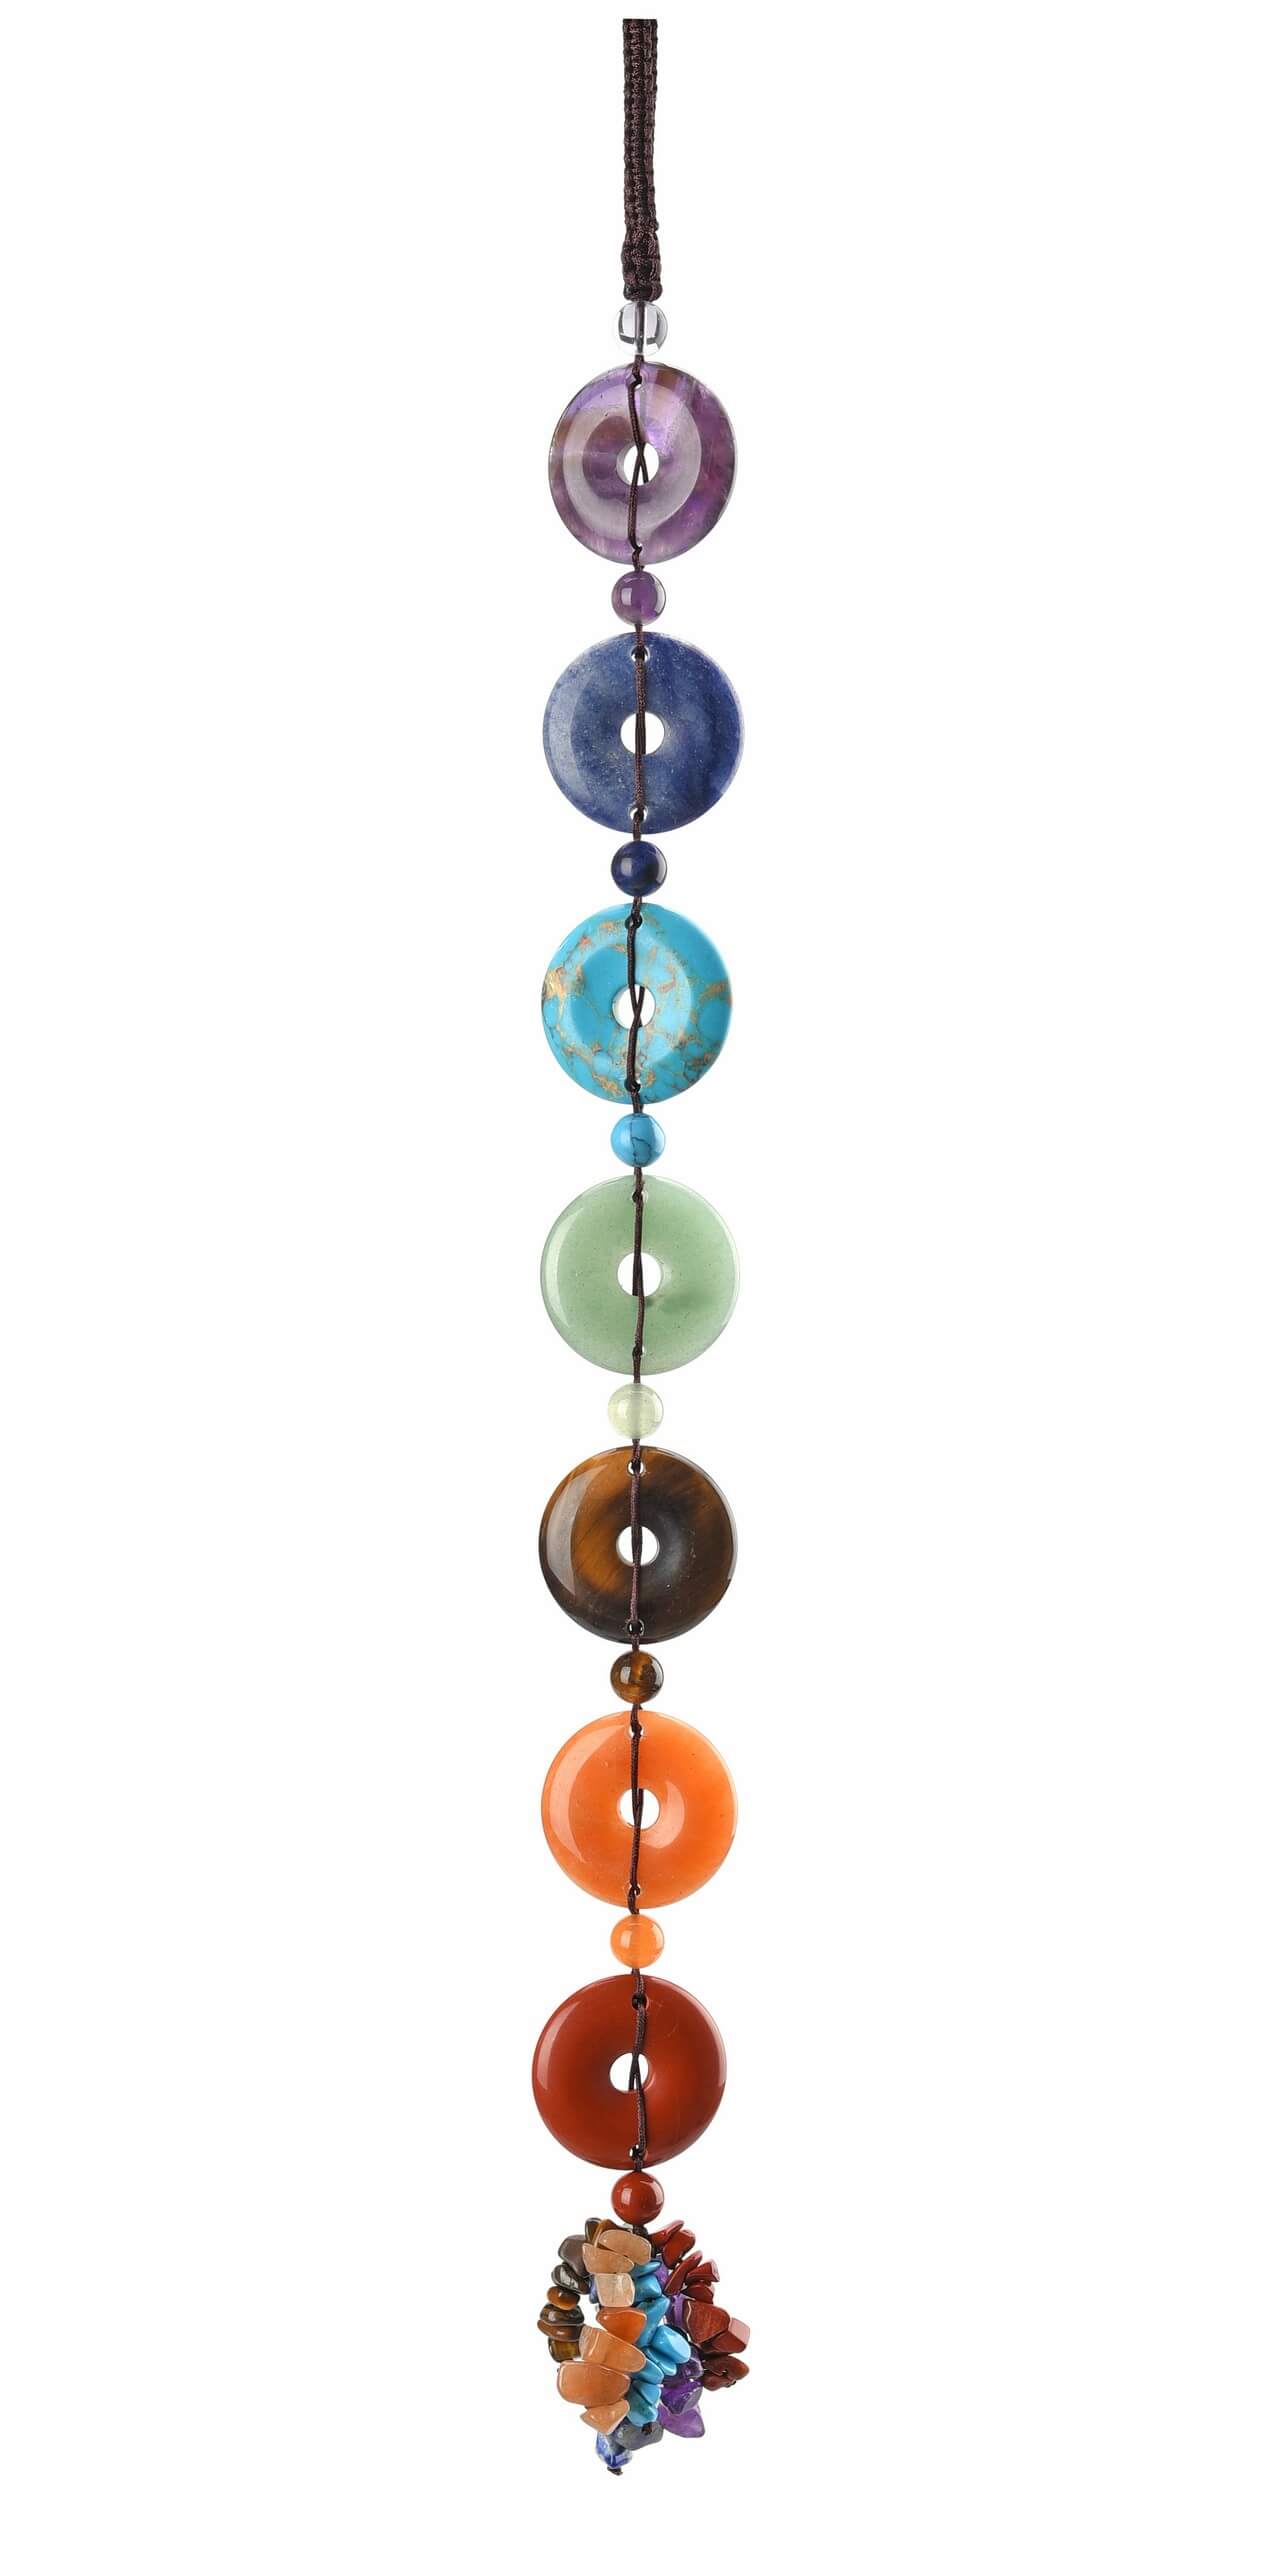 Jovivi 7 chakras peace buckle hanging ornaments for home decor healing reiki